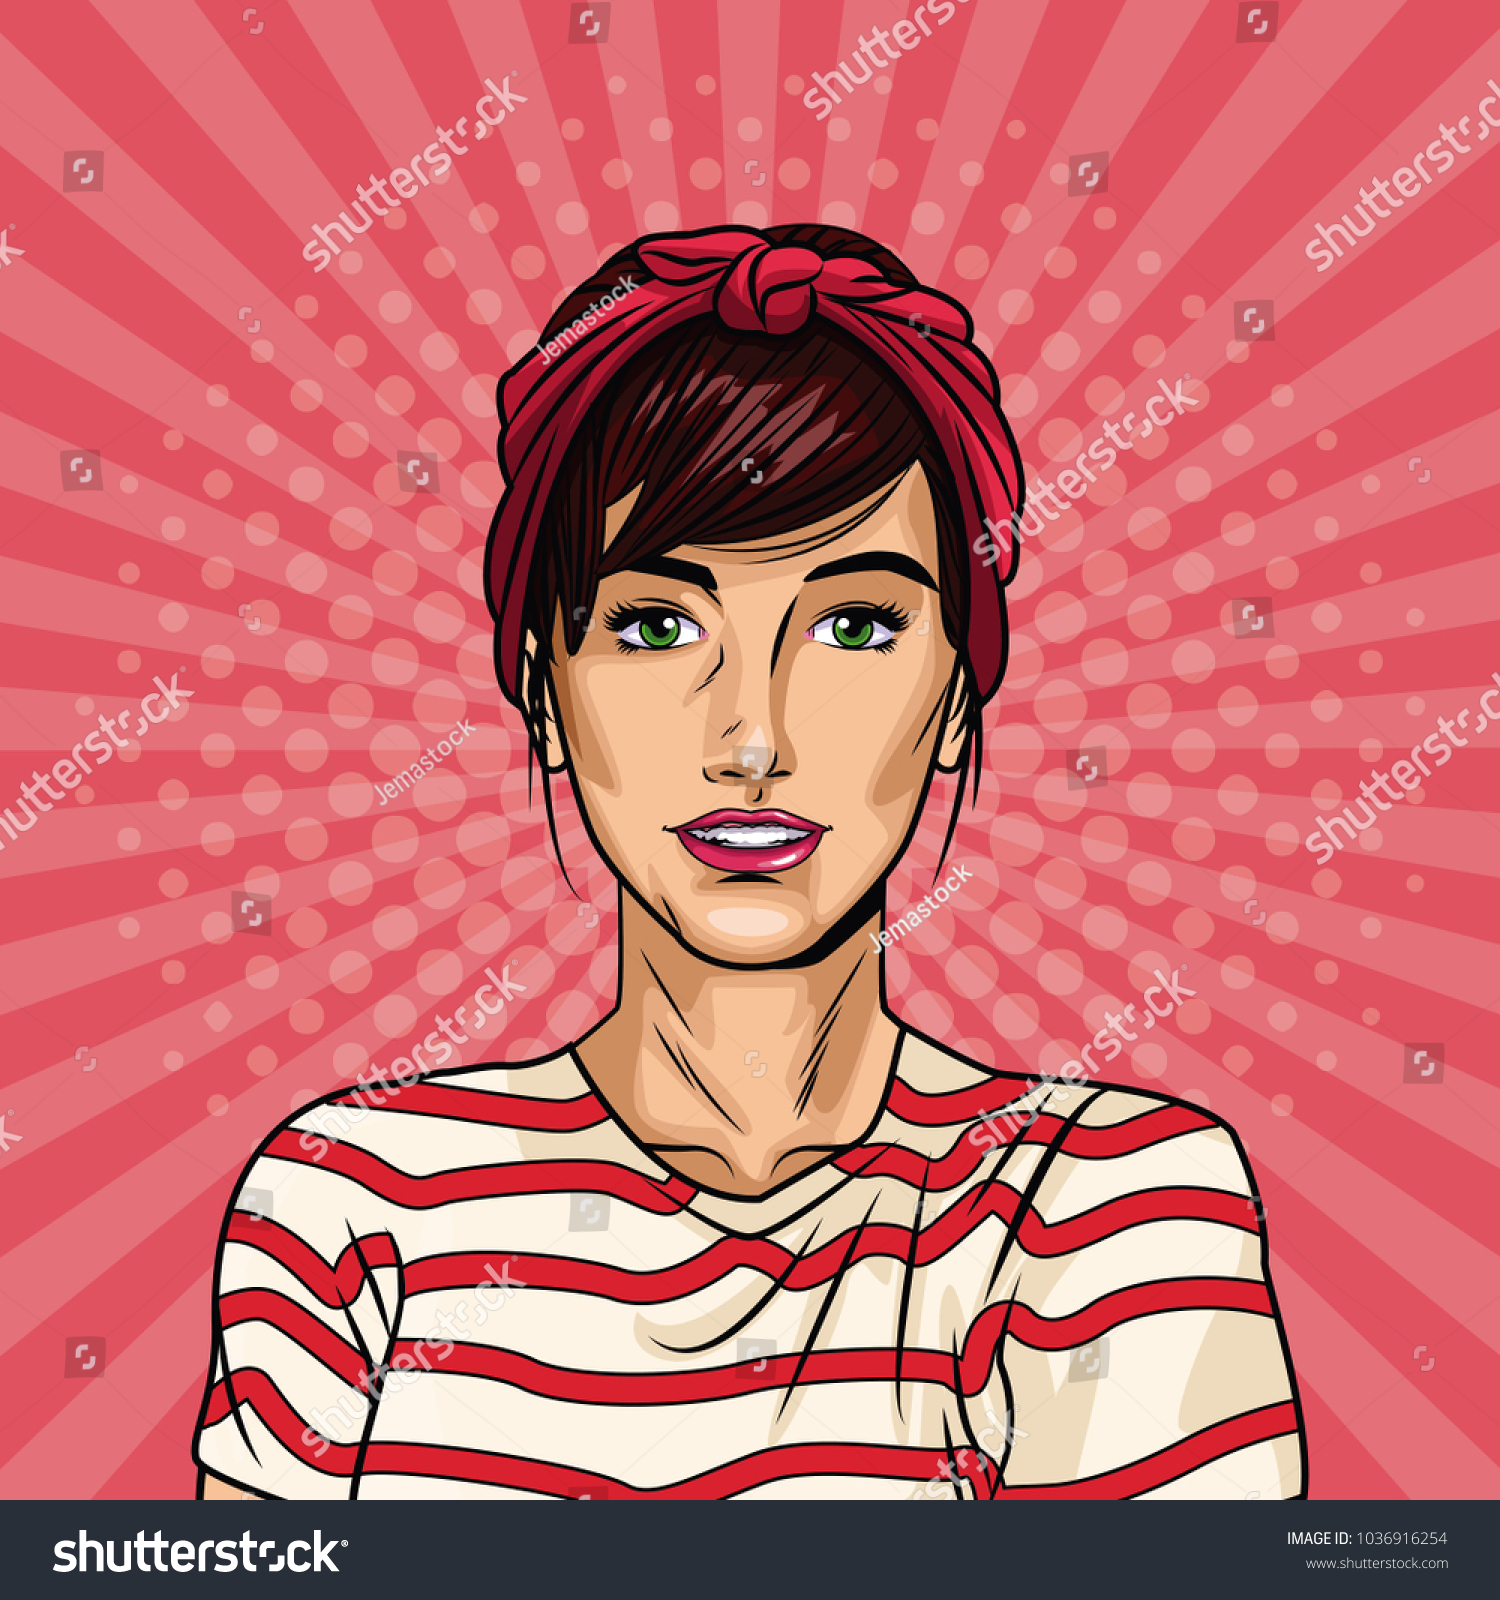 Fashion Woman Pop Art Cartoon Stock Vector Royalty Free 1036916254 Shutterstock 